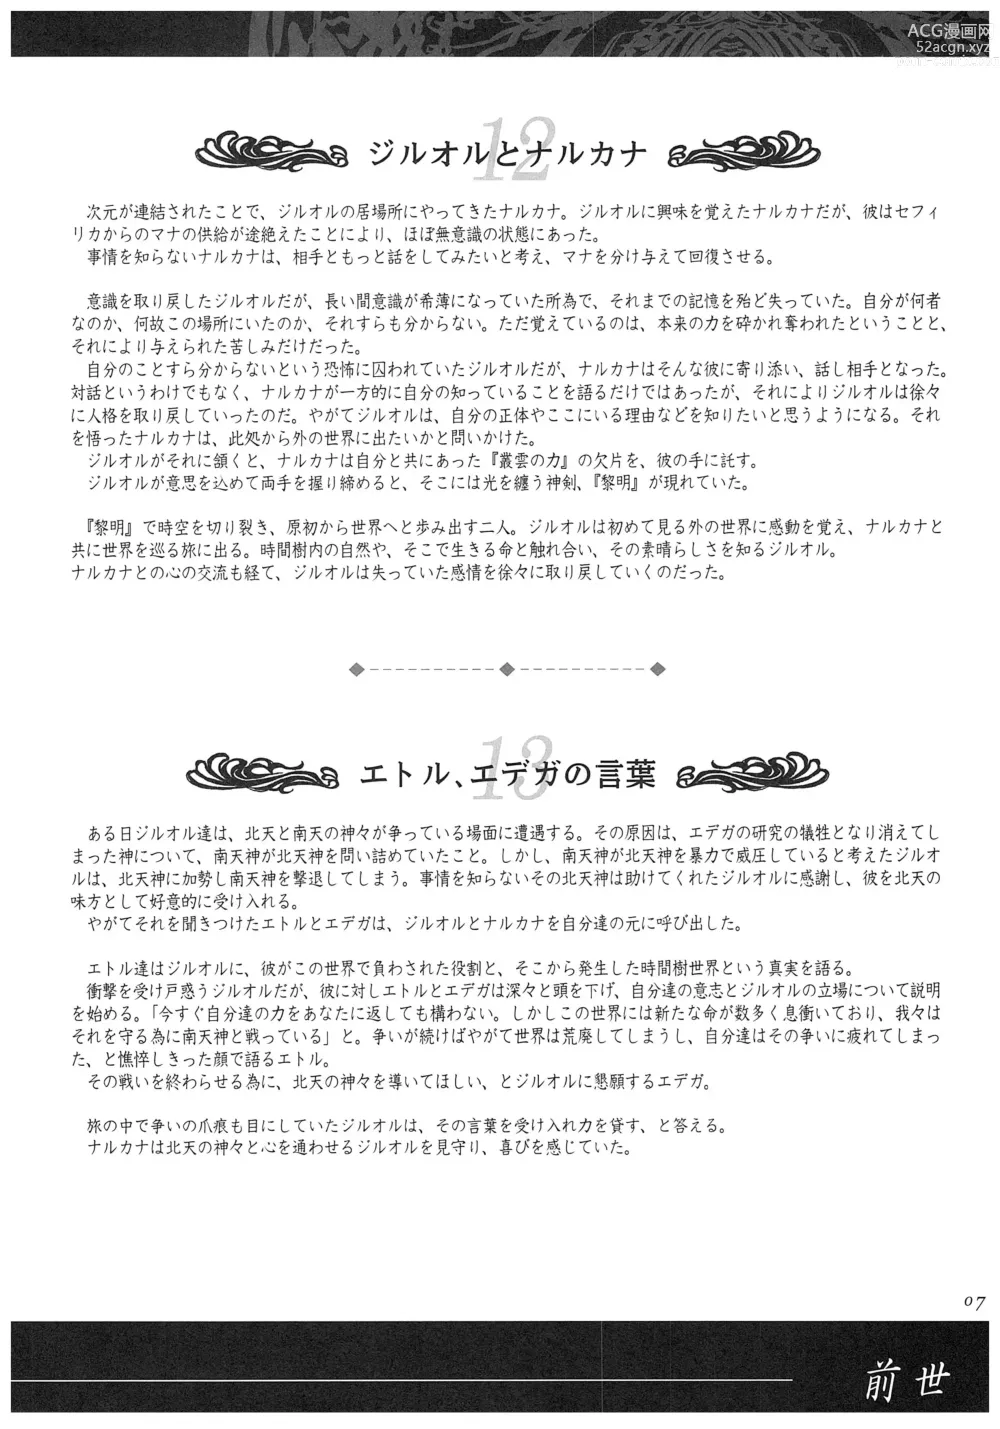 Page 135 of manga Seinarukana - offical ArtBook